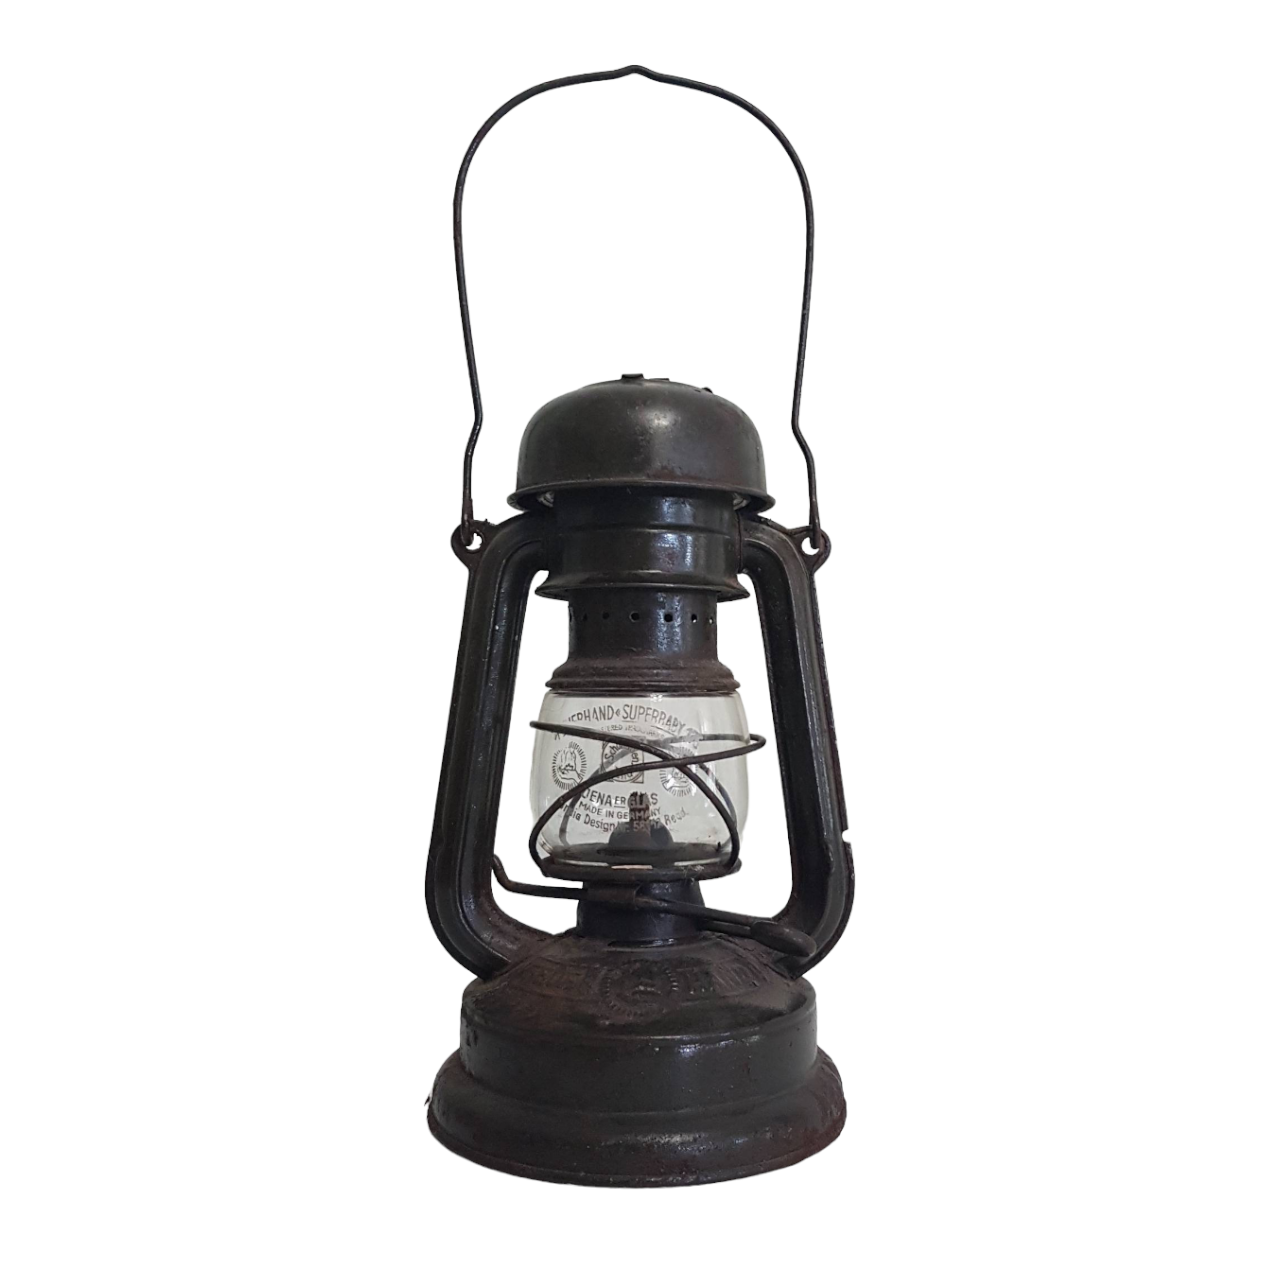 Antique German Lantern FeuerHand Superbaby 175 - Wainfleet Trading Post